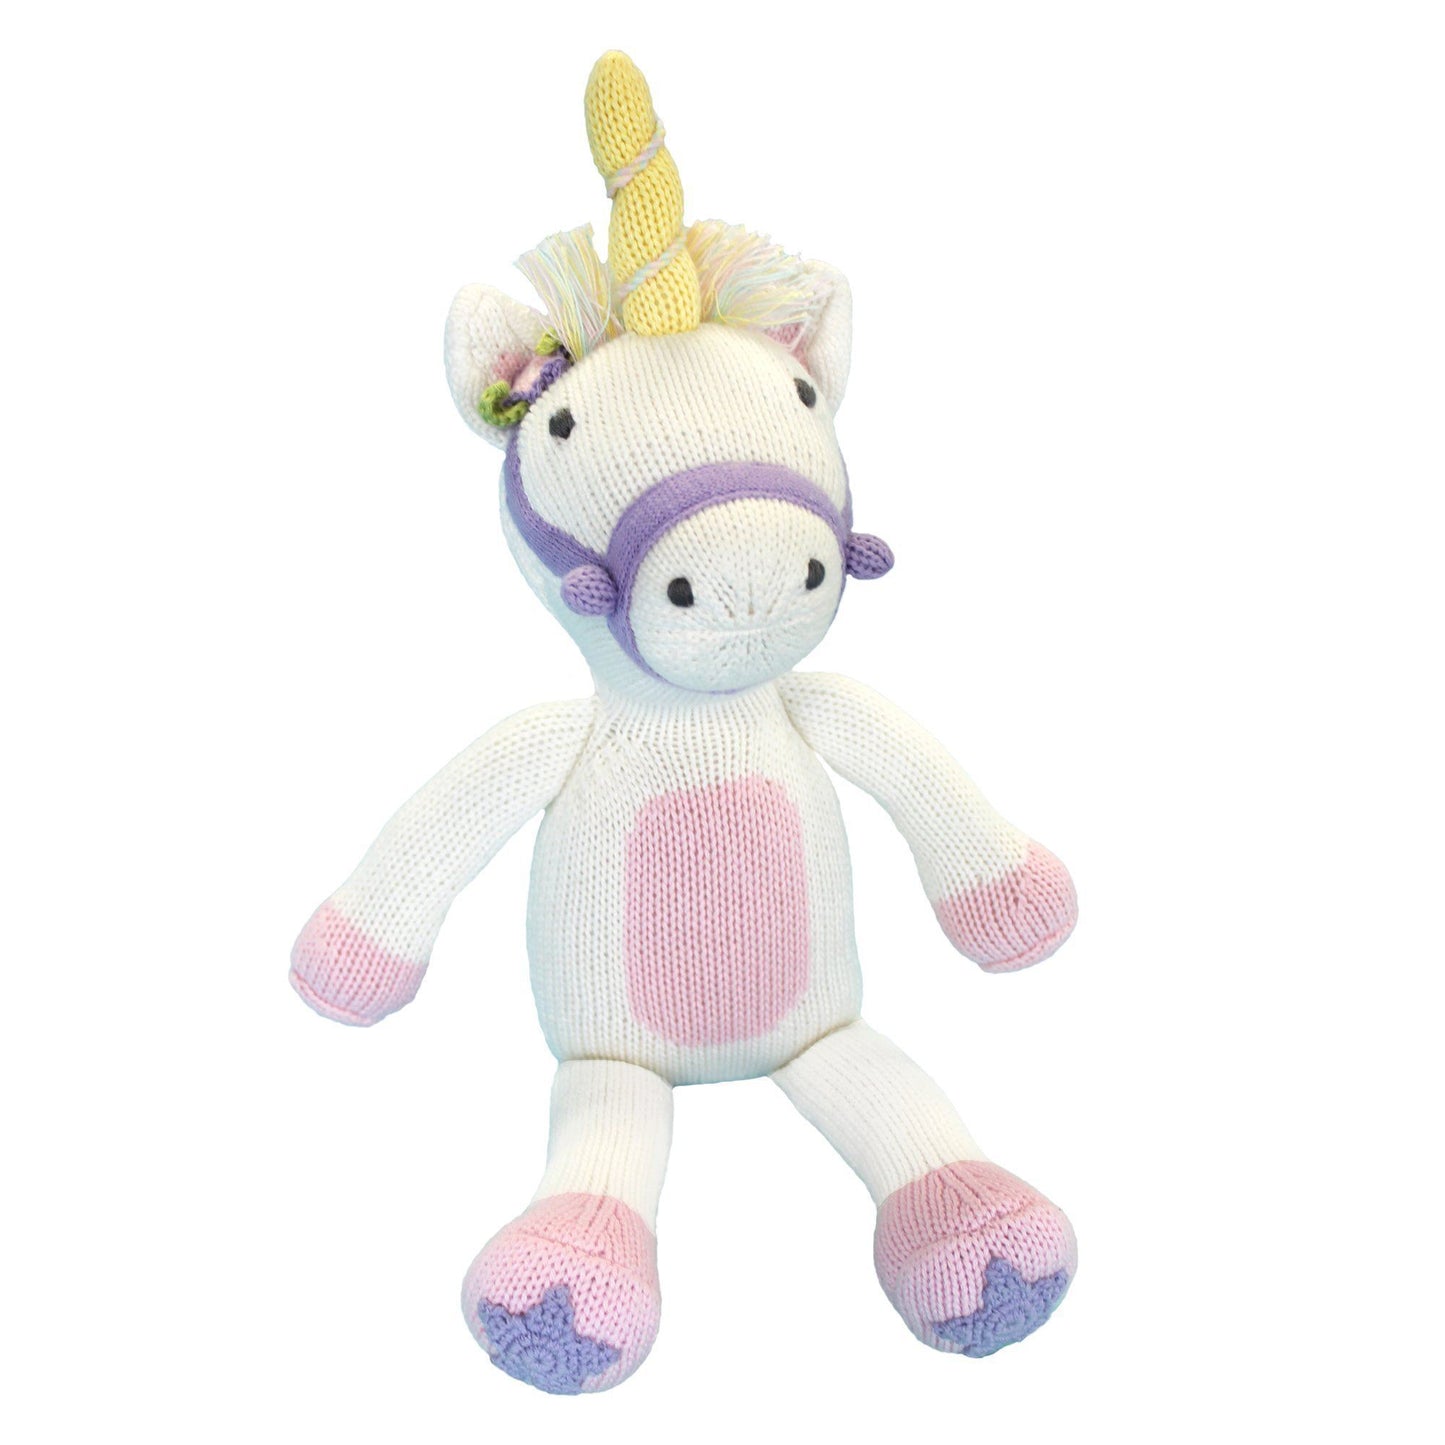 Zubels Twinkle the Unicorn (14" doll)